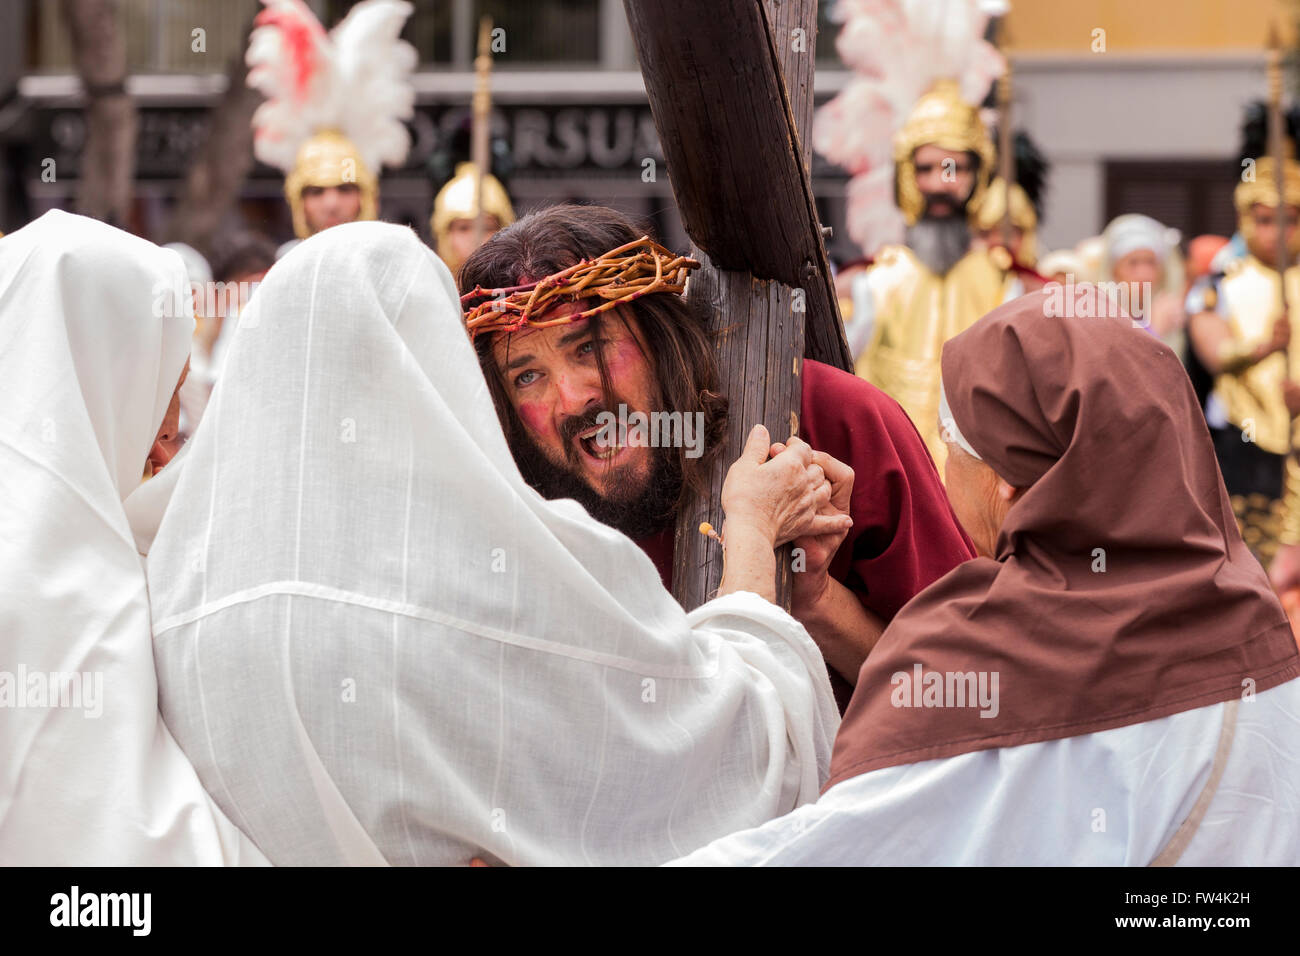 Jesus carrying the cross, Passion play, Adeje, Tenerife, Canary Islands, Spain, Representacion de la Pasion. Adeje. 25 Marzo 201 Stock Photo